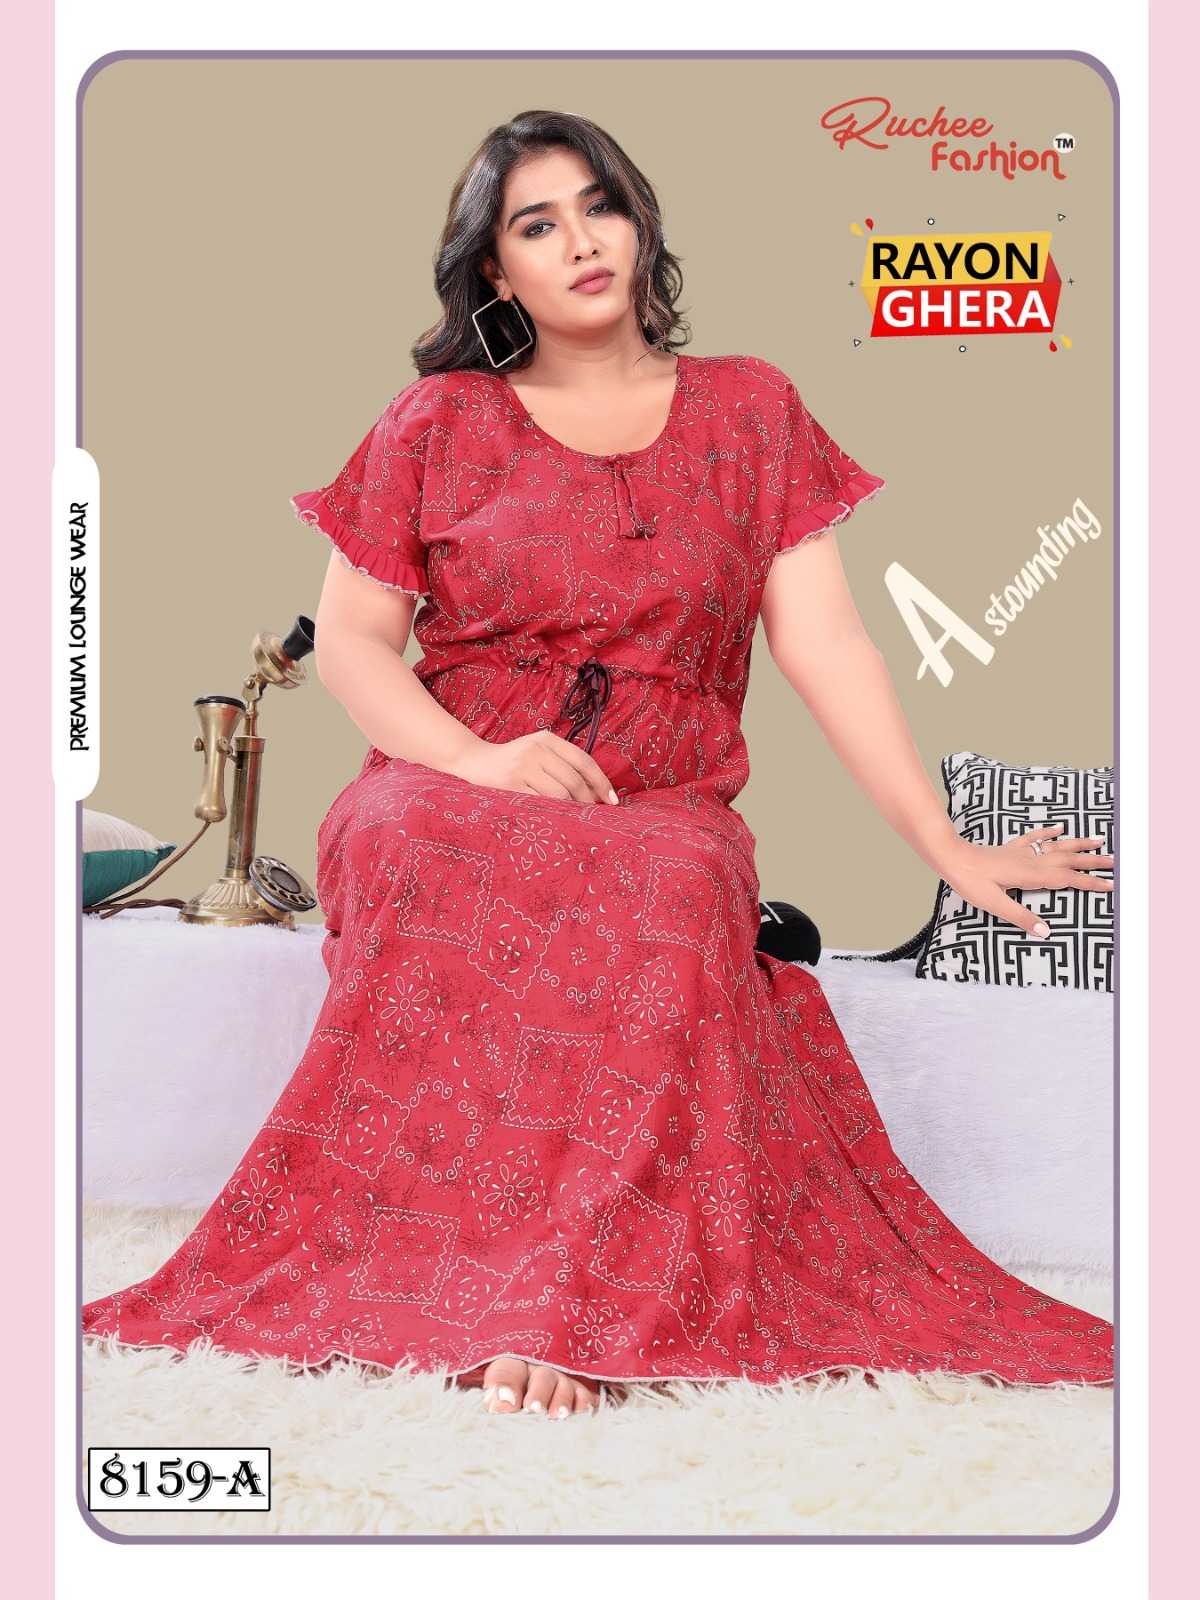 ruchee fashion 8156-8159 rayon ghera fancy sleeve women nighty gown